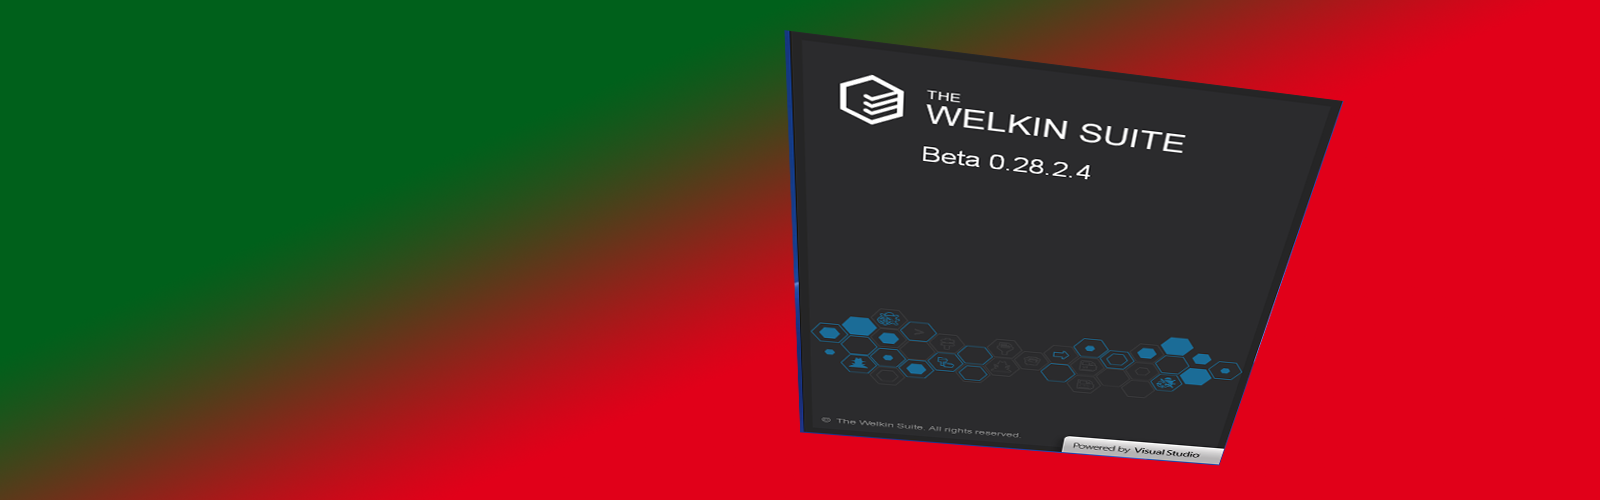 Salesforce : Welkin Suite IDE for Salesforce devs